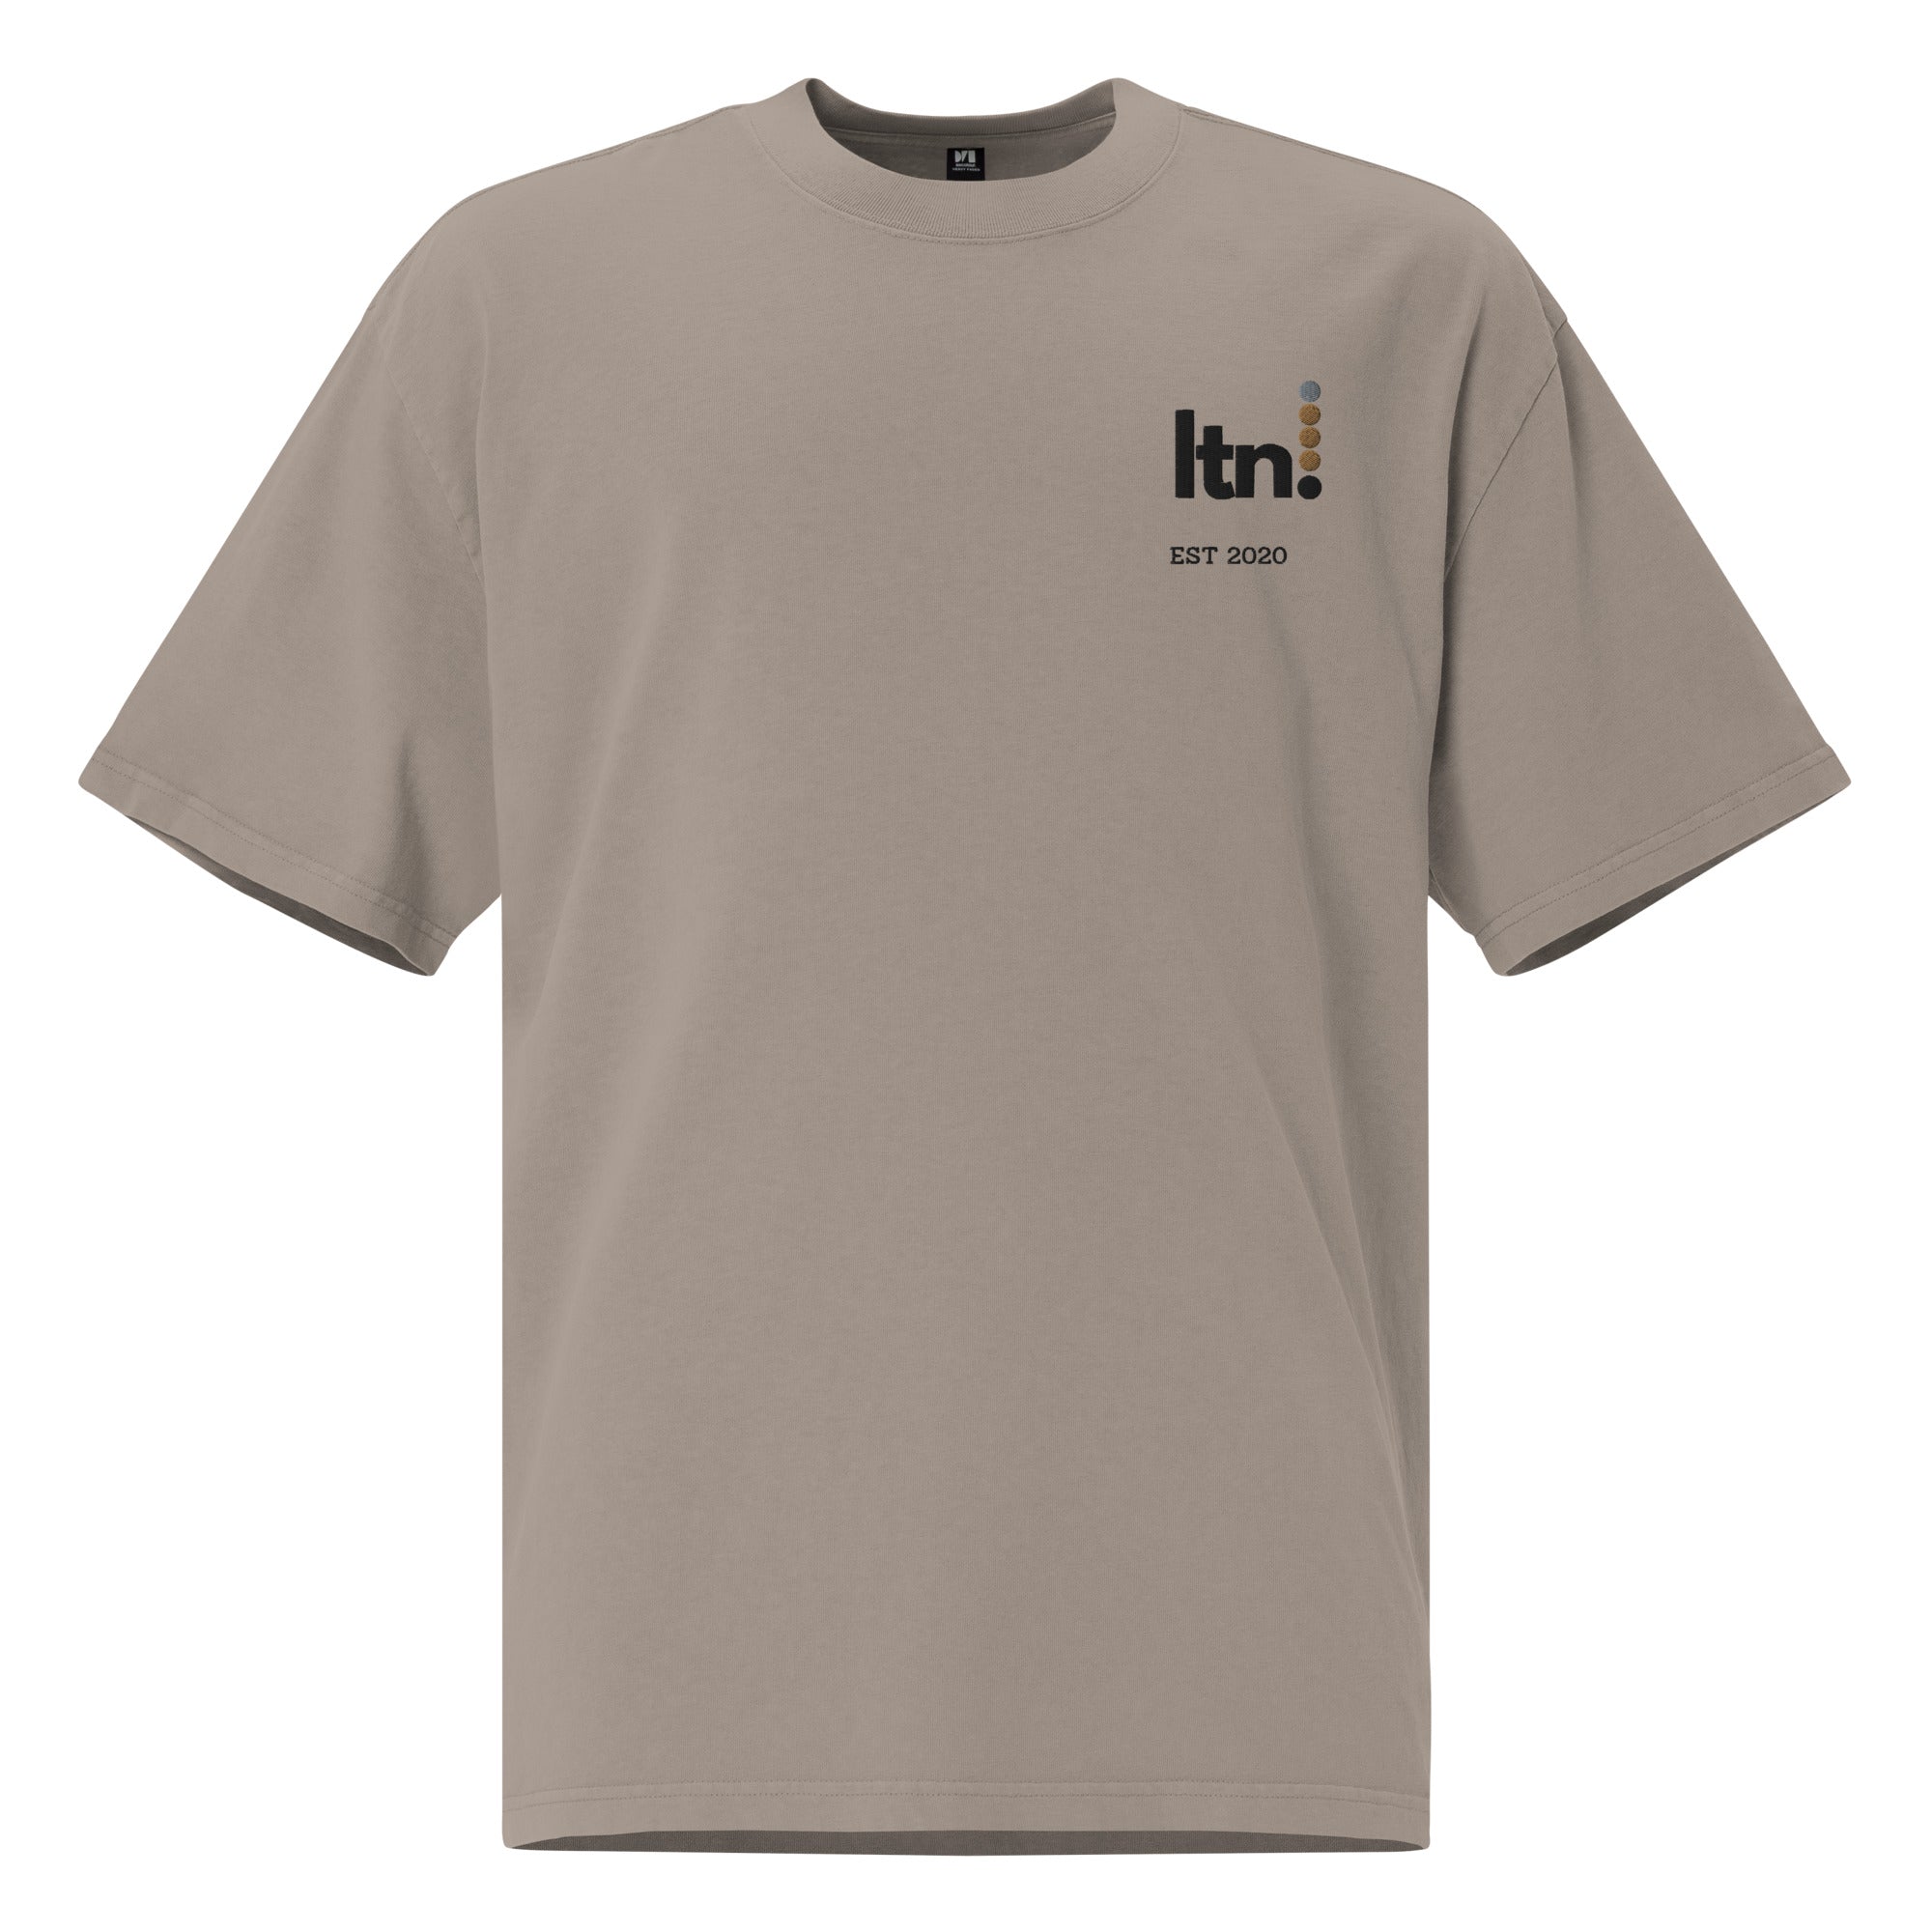 Ltn Oversized faded t-shirt